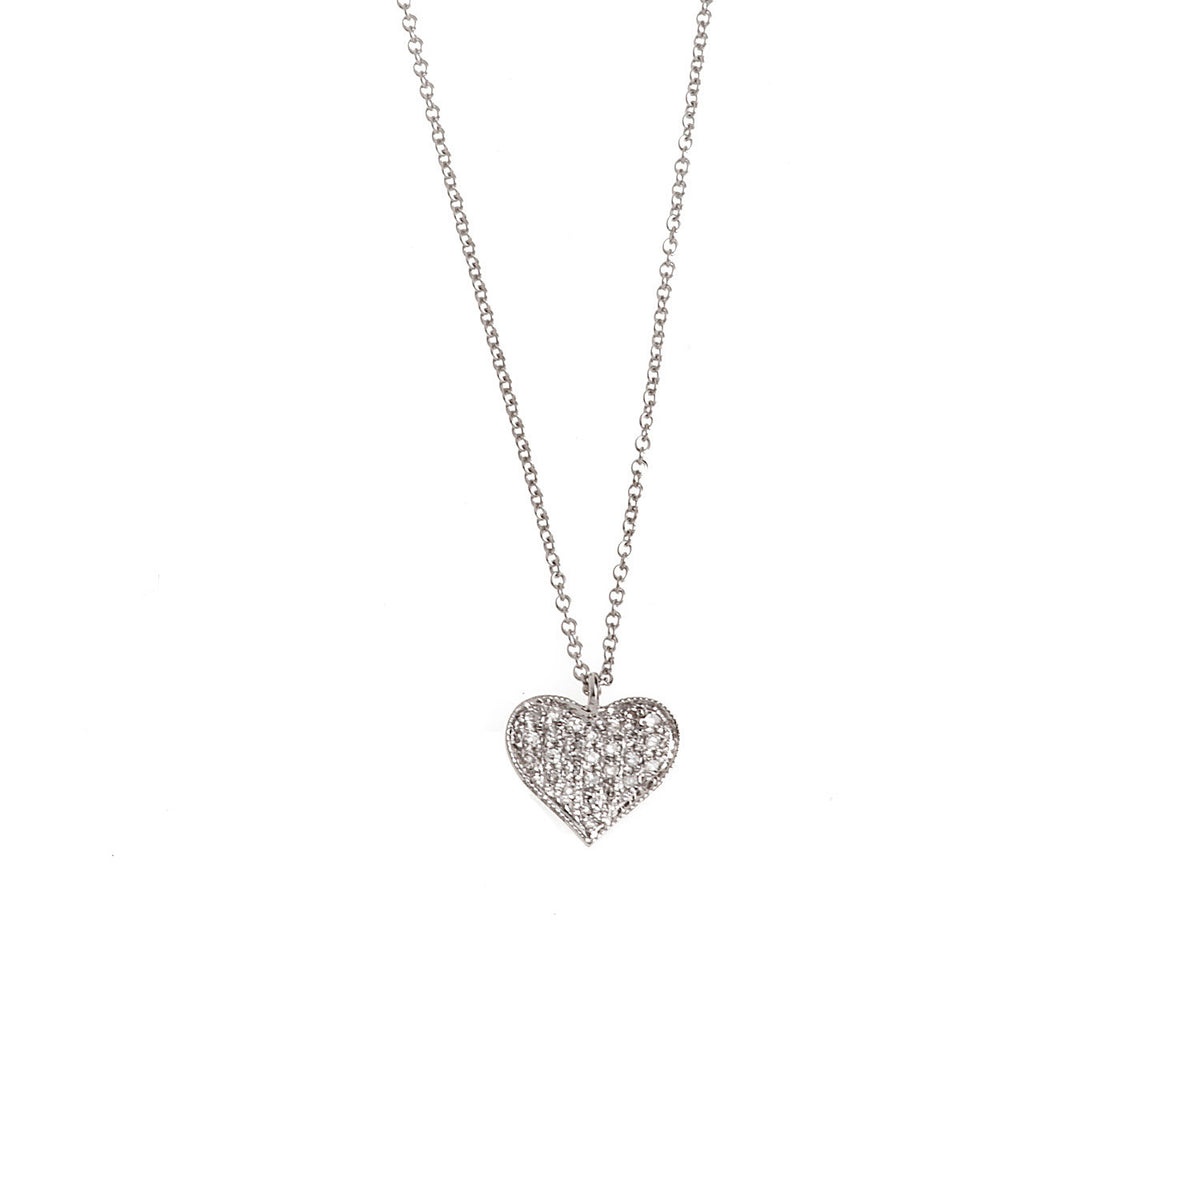 Diamond heart necklace. Κολιέ καρδιά με μπριγιάν.